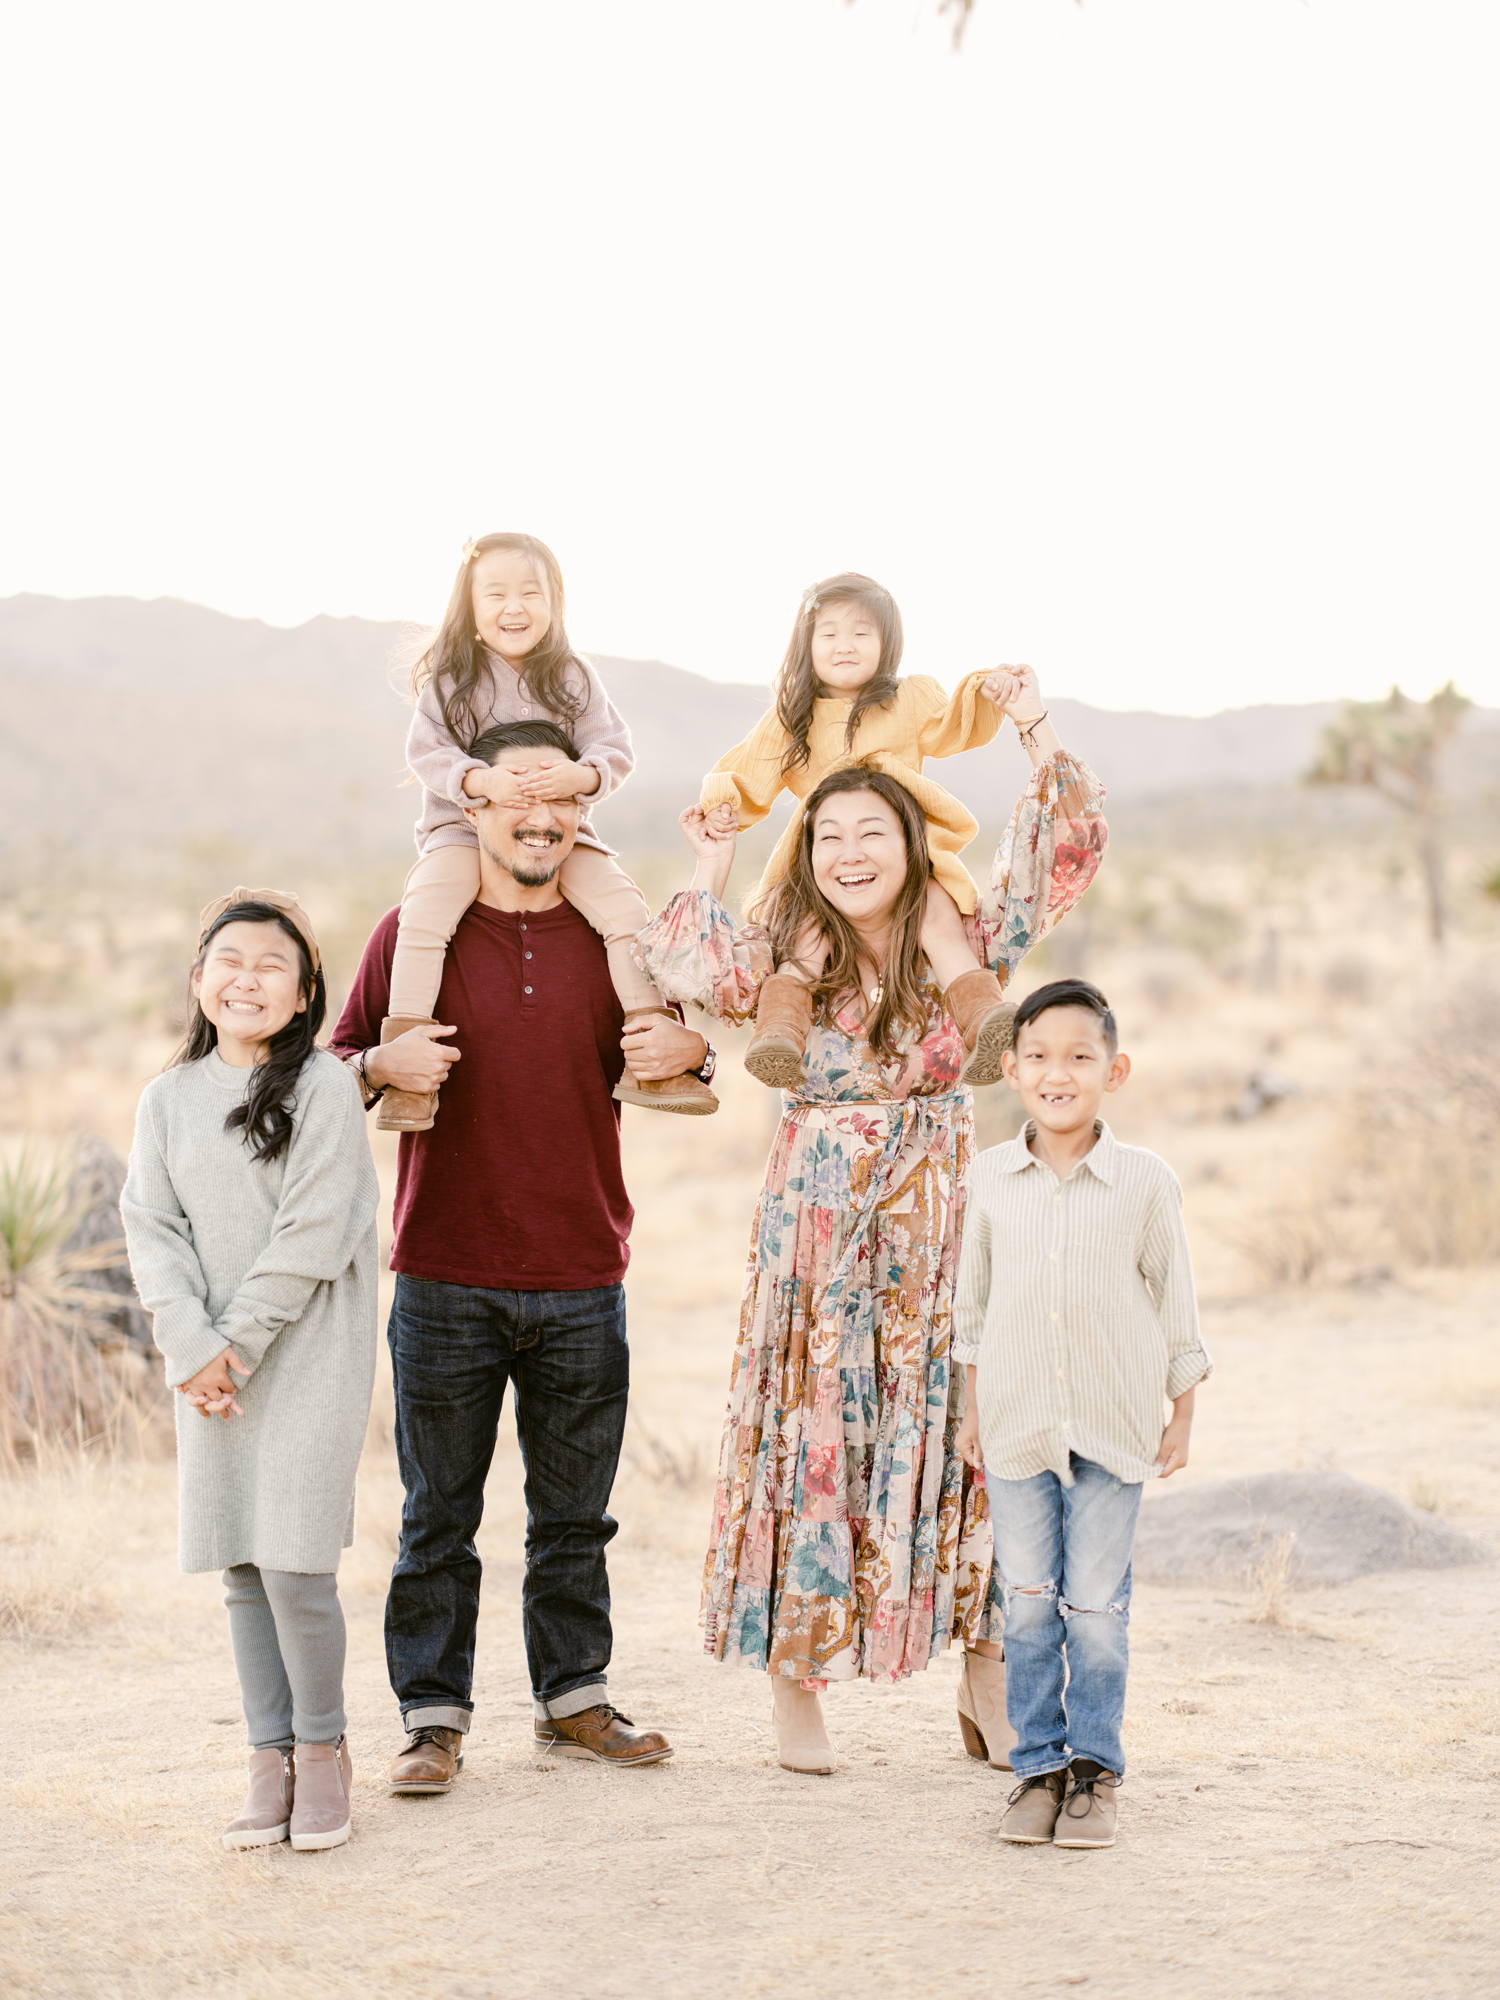 An Asian family of six playfully pose for a portrait, framed amongst sprawling desert surroundings